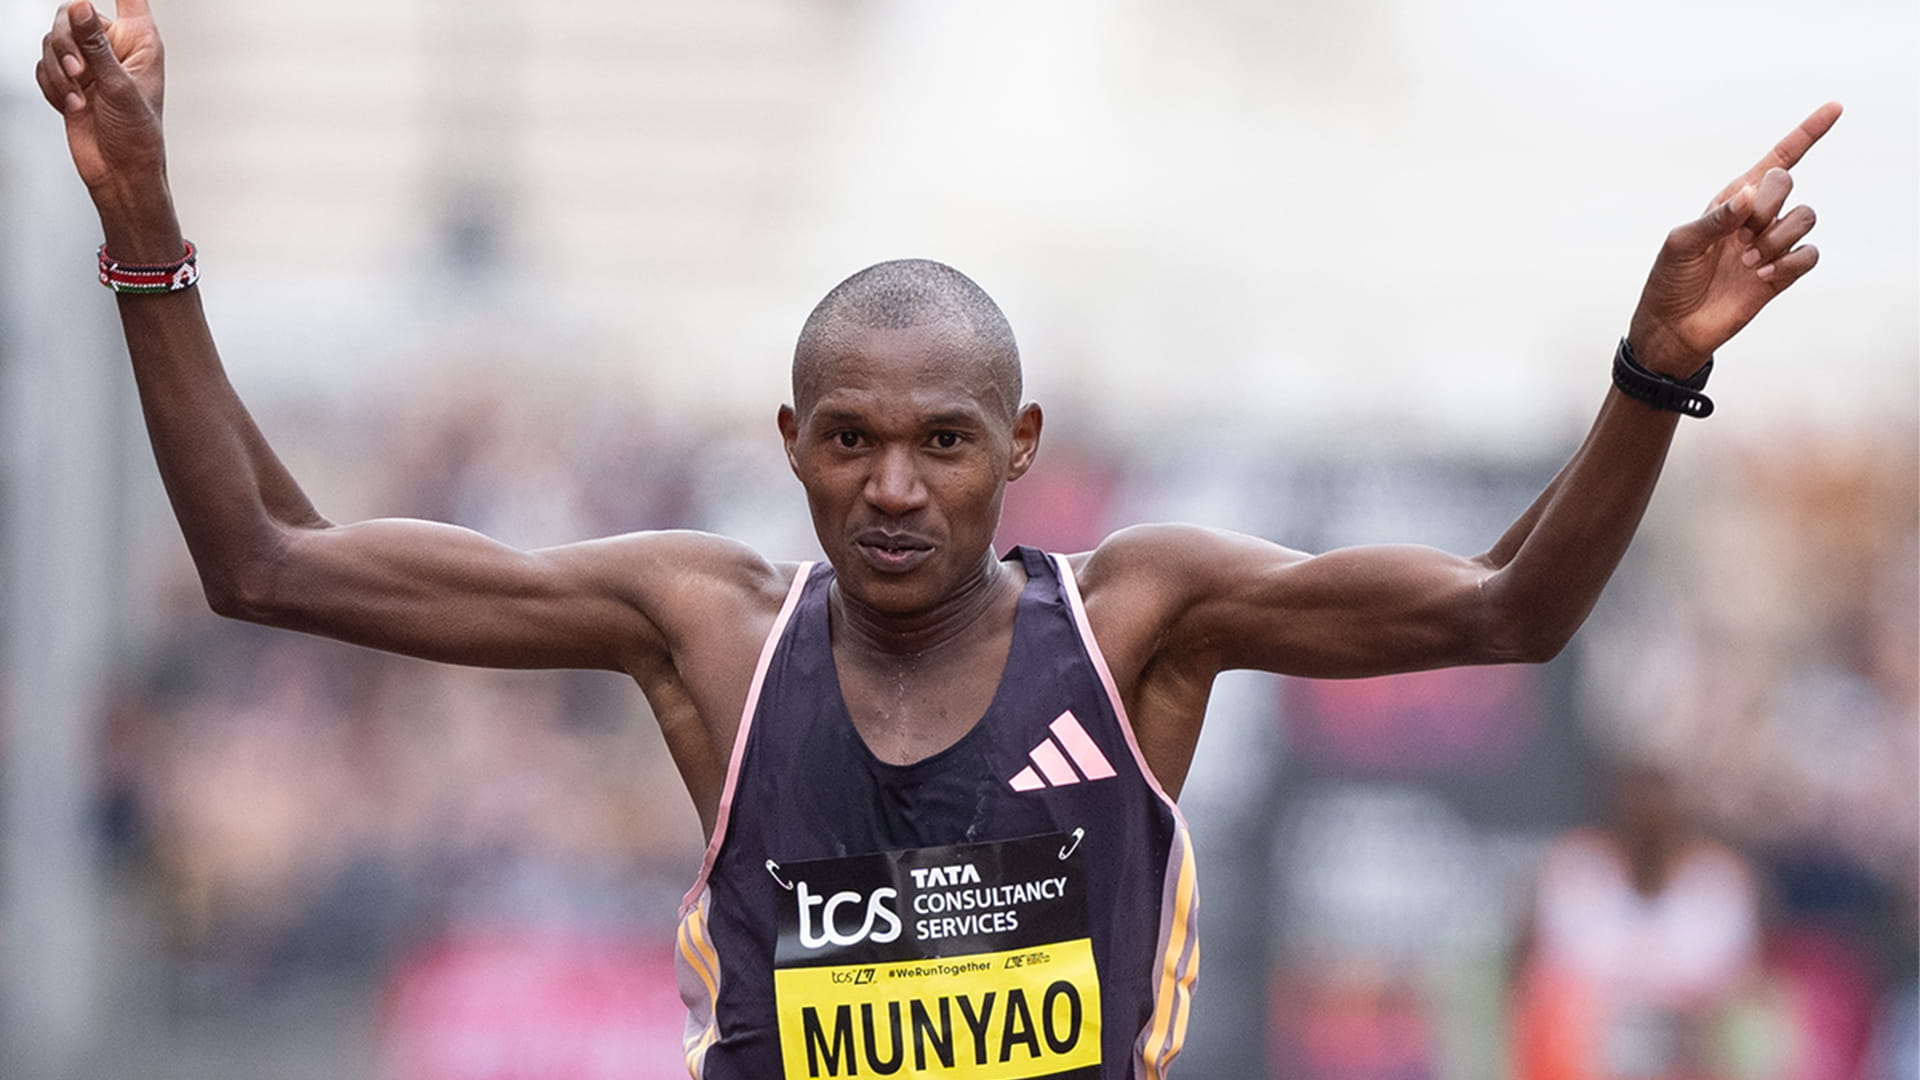 Munyao crossing the Finish Line